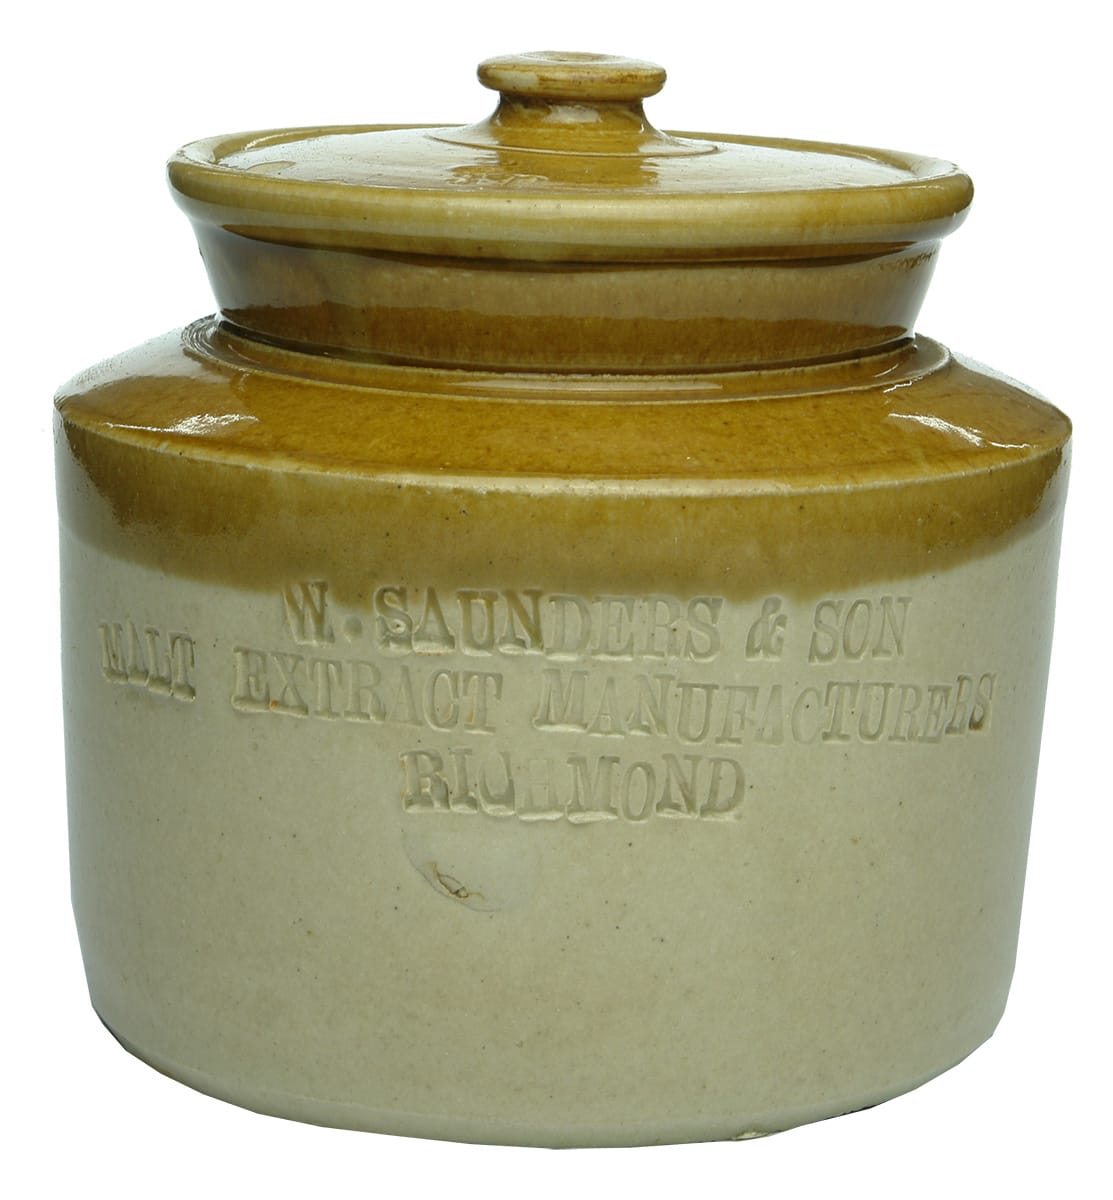 Saunders Malt Extract Manufacturers Richmond Stoneware Jar